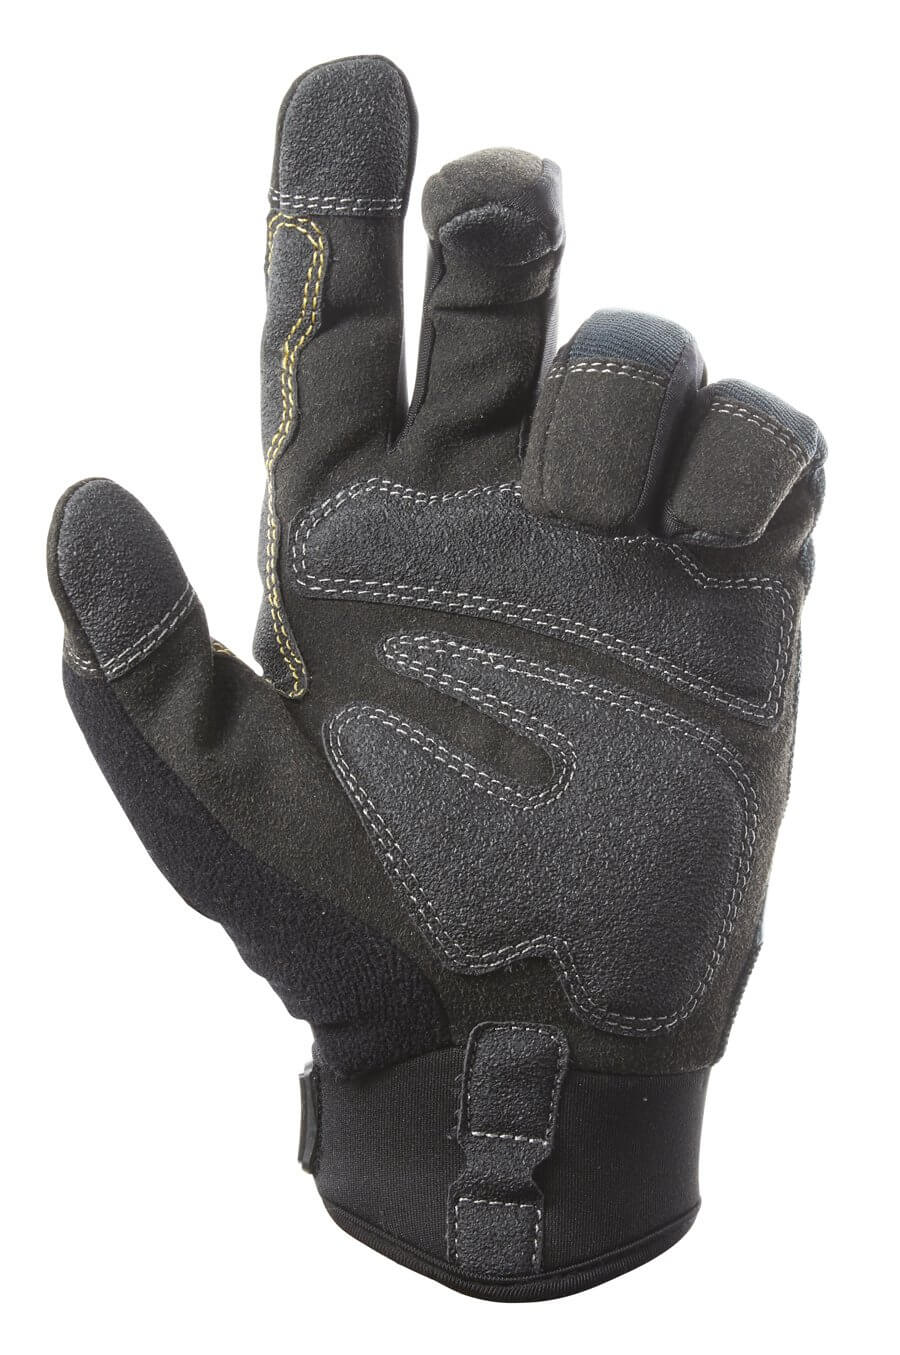 CLC Tradesman Flex Grip Gloves - Large - wise-line-tools